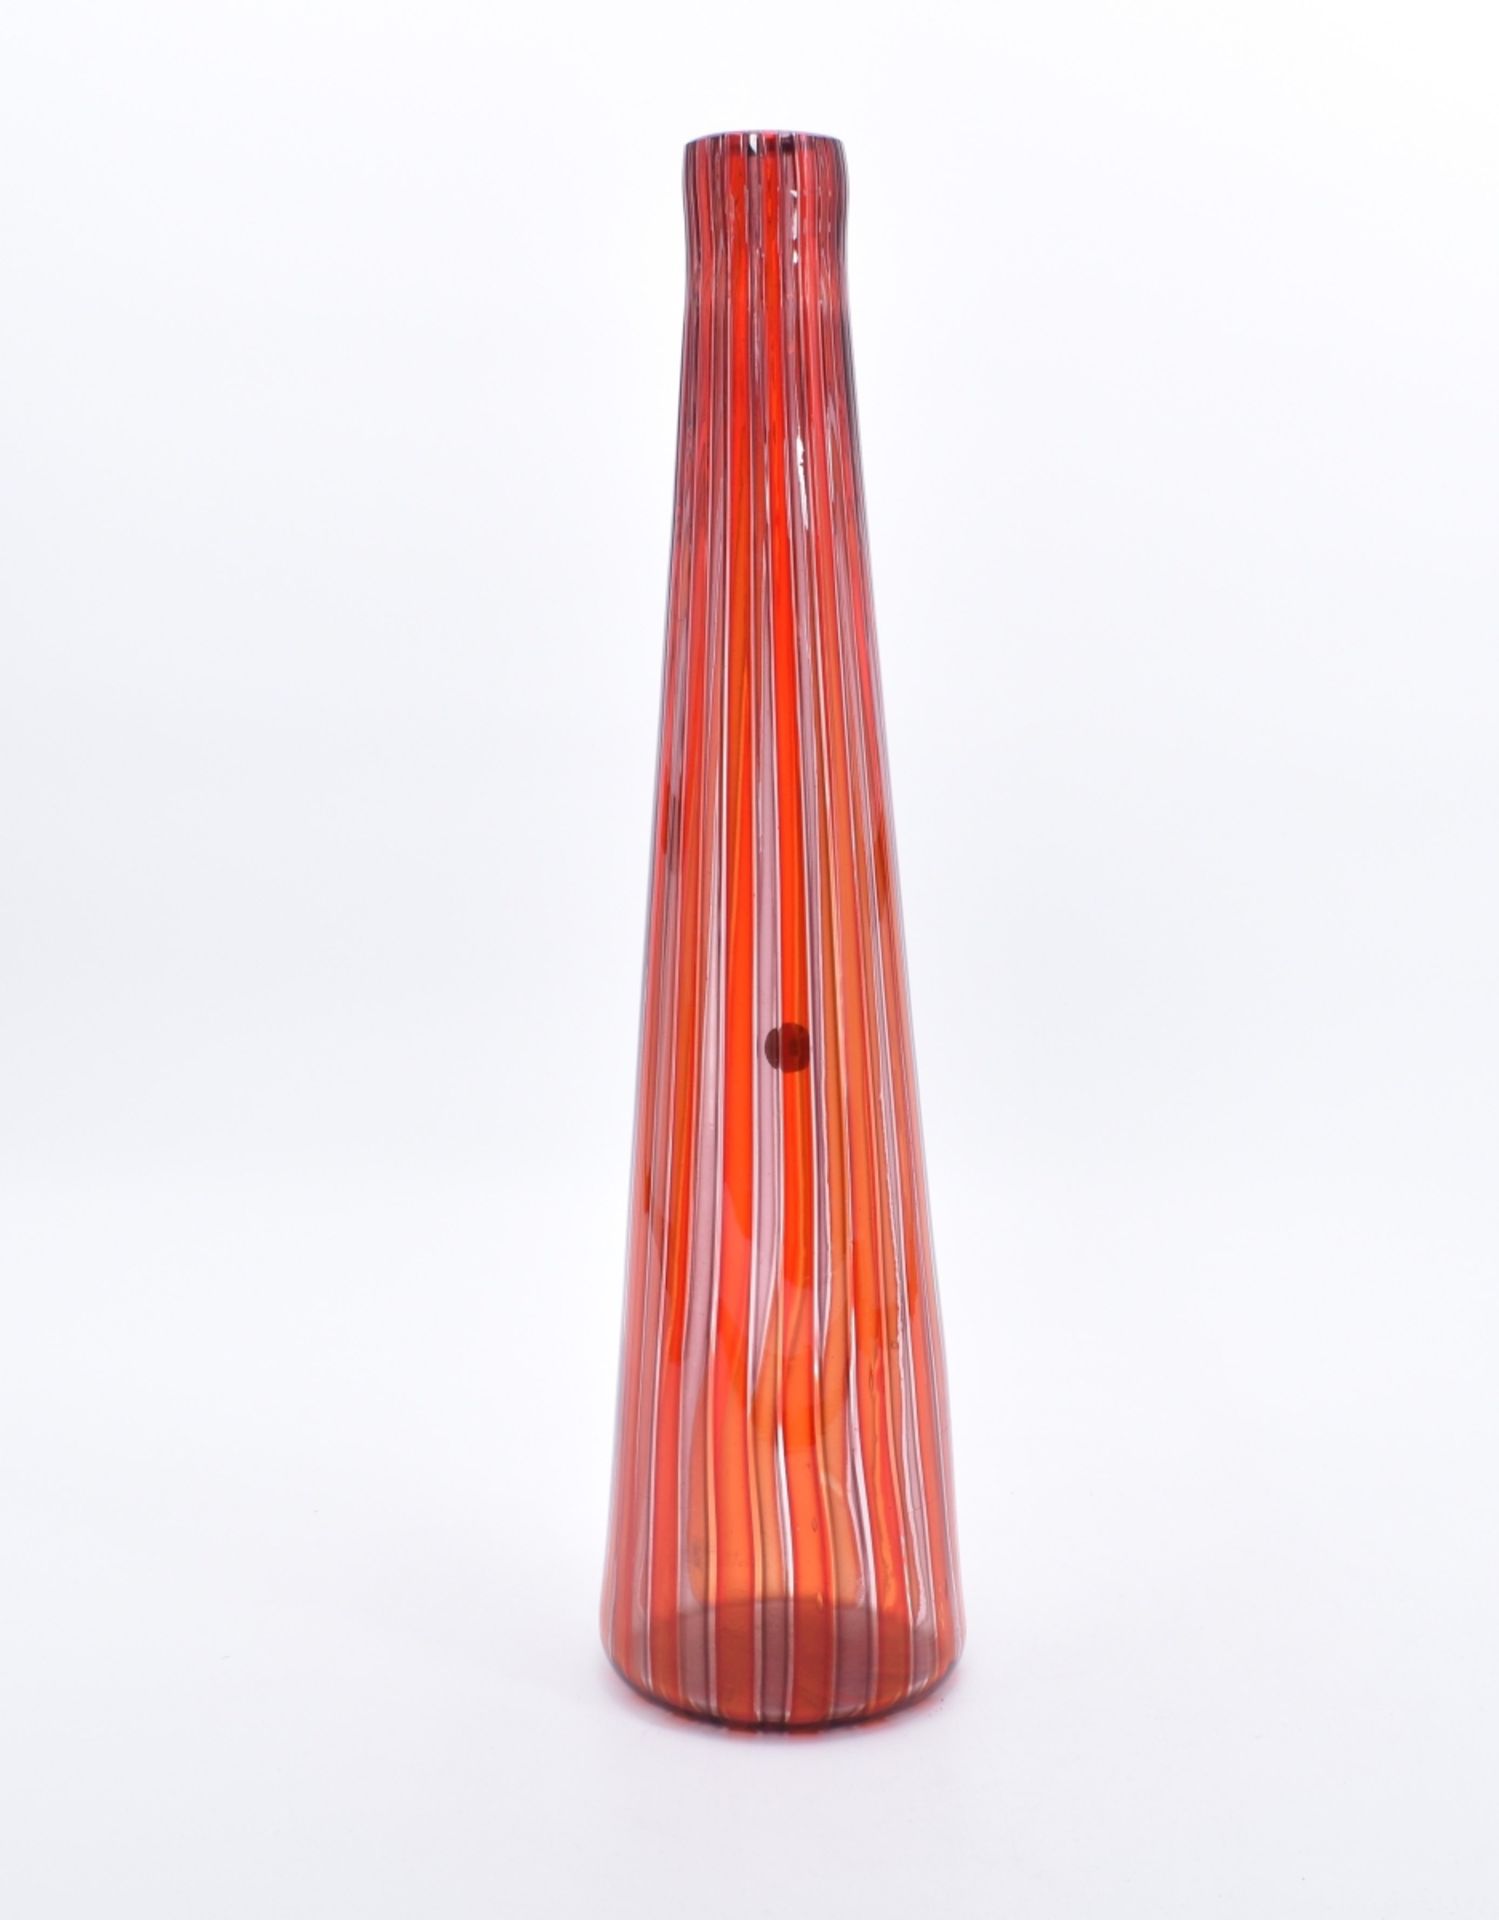 Schlanke Vase, Murano, 20. Jh. - Image 3 of 4